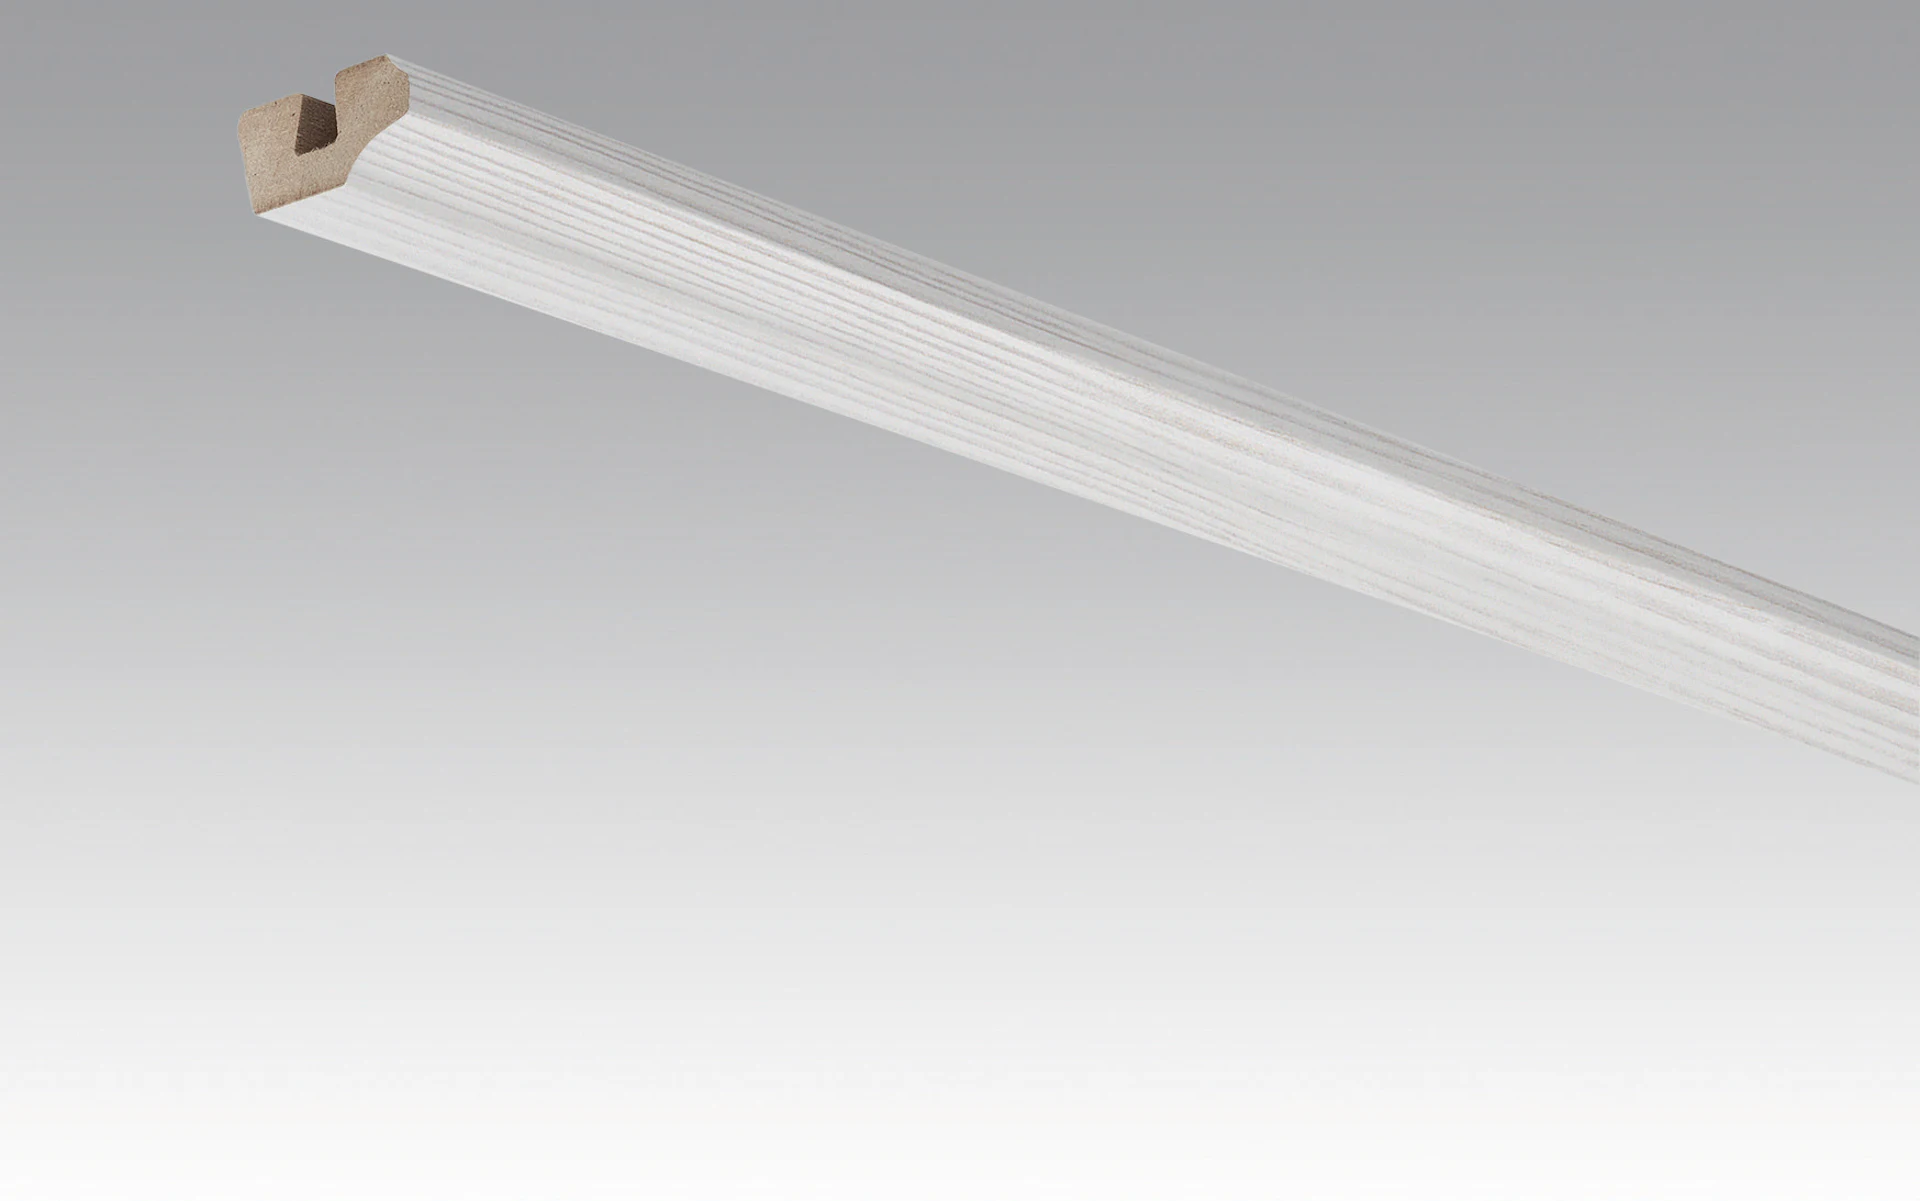 MEISTER Skirtings Ceiling trims Pine white 4005 - 2380 x 38 x 19 mm (200031-2380-04005)